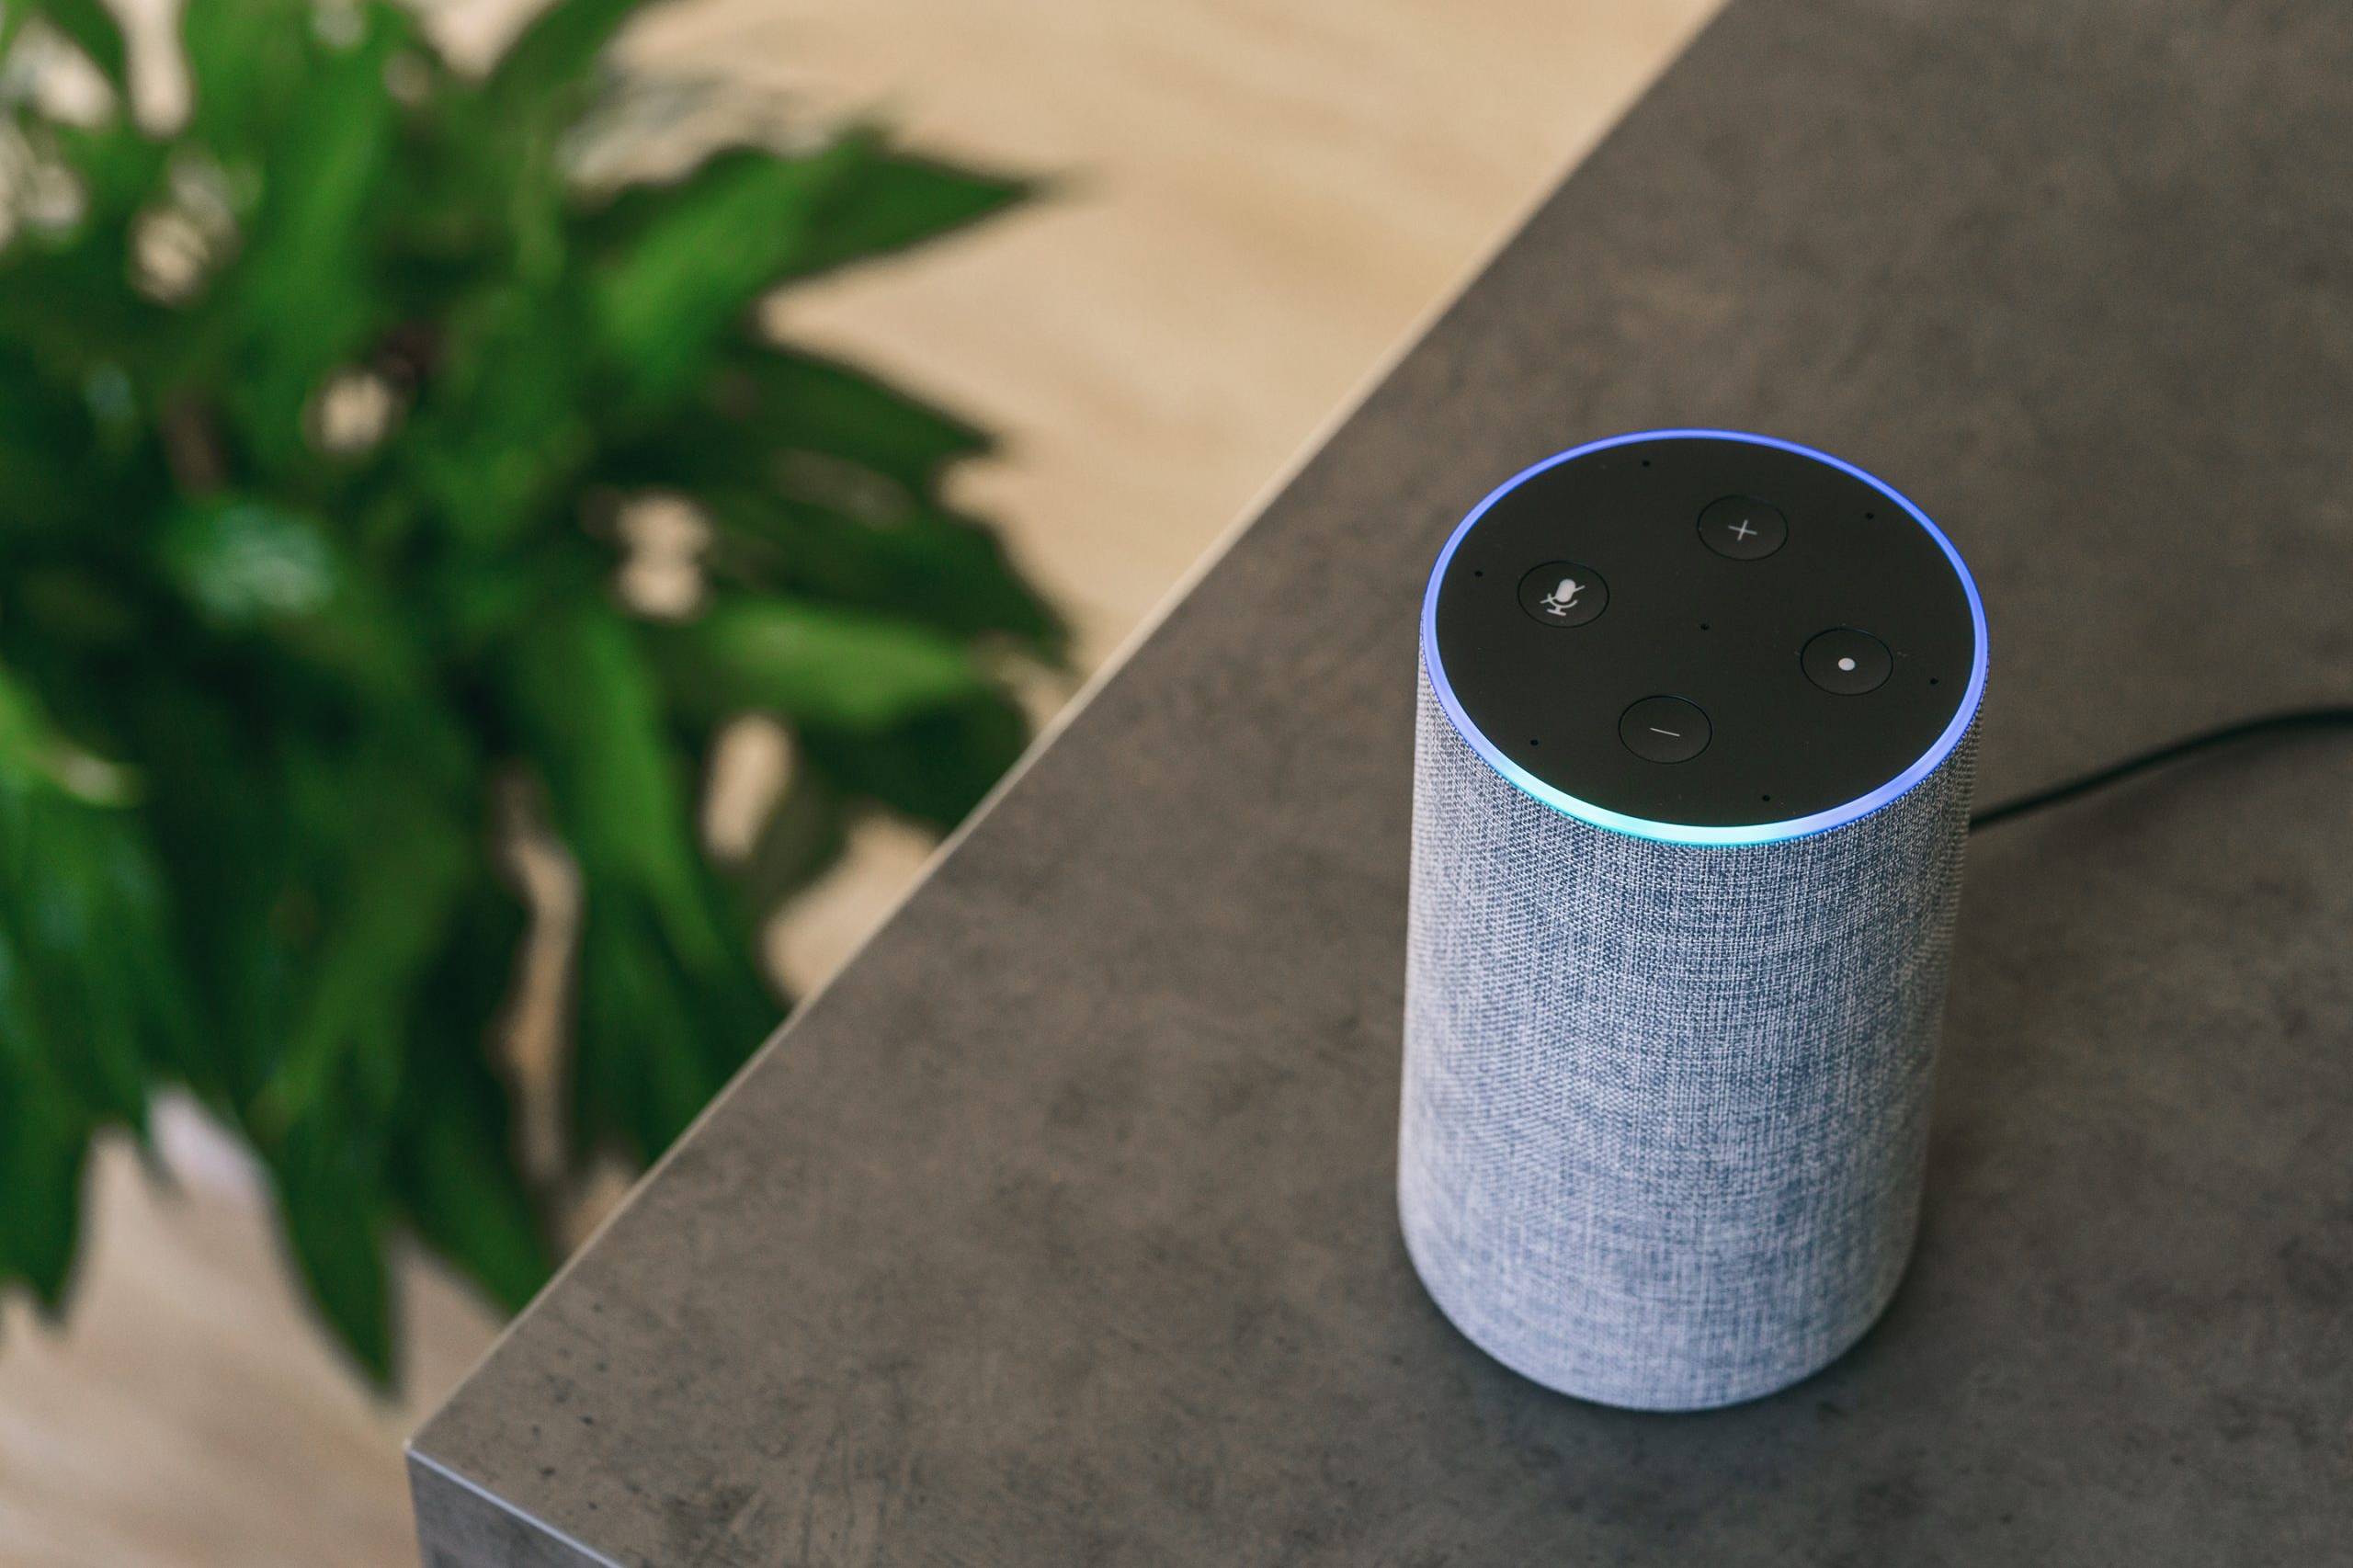 Amazon Echo smart speaker DMG